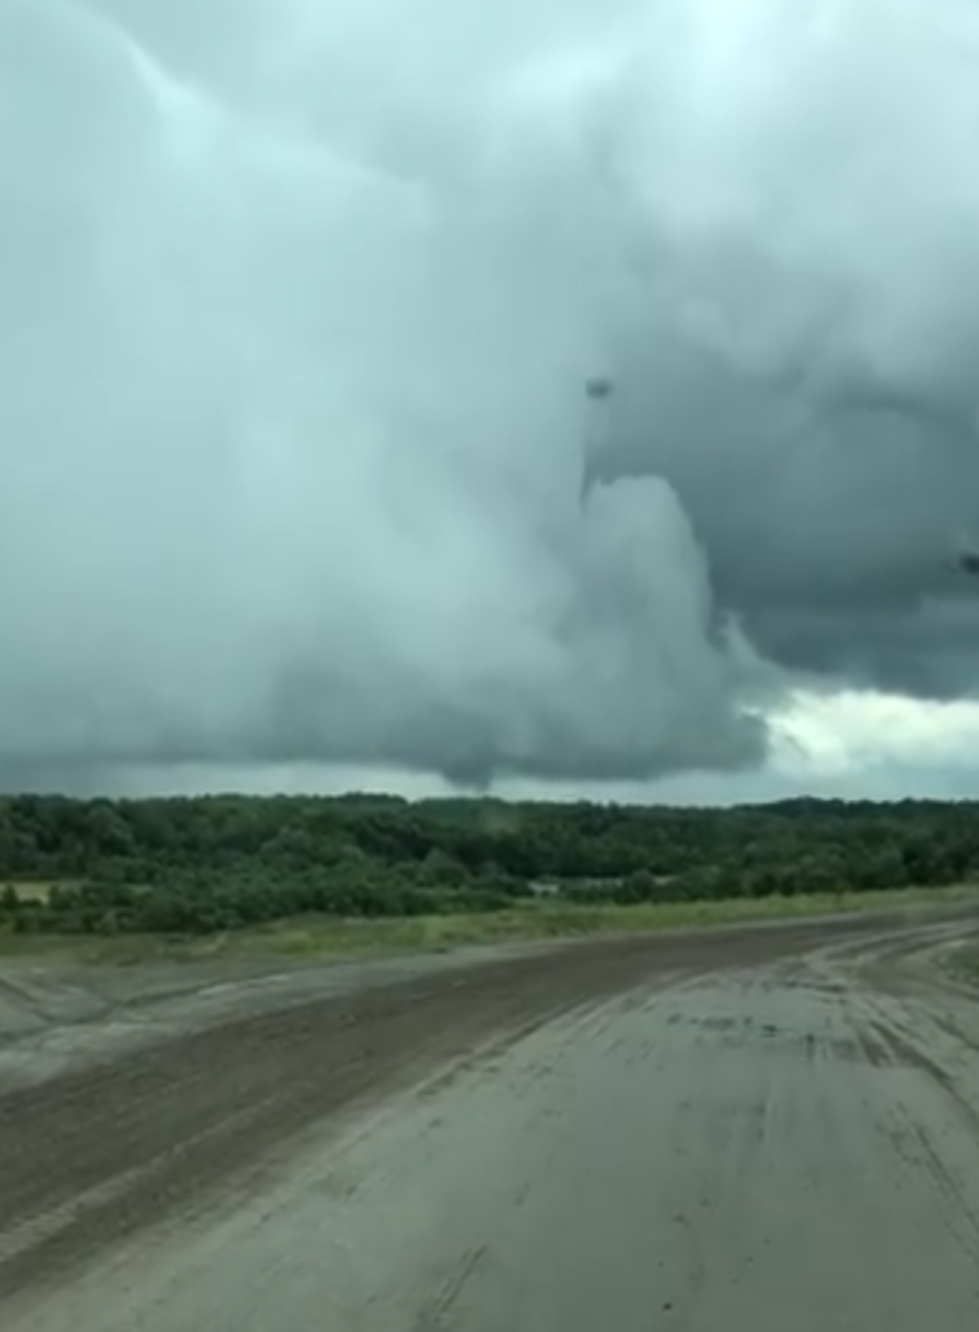 Video Footage of Ohio County Tornado